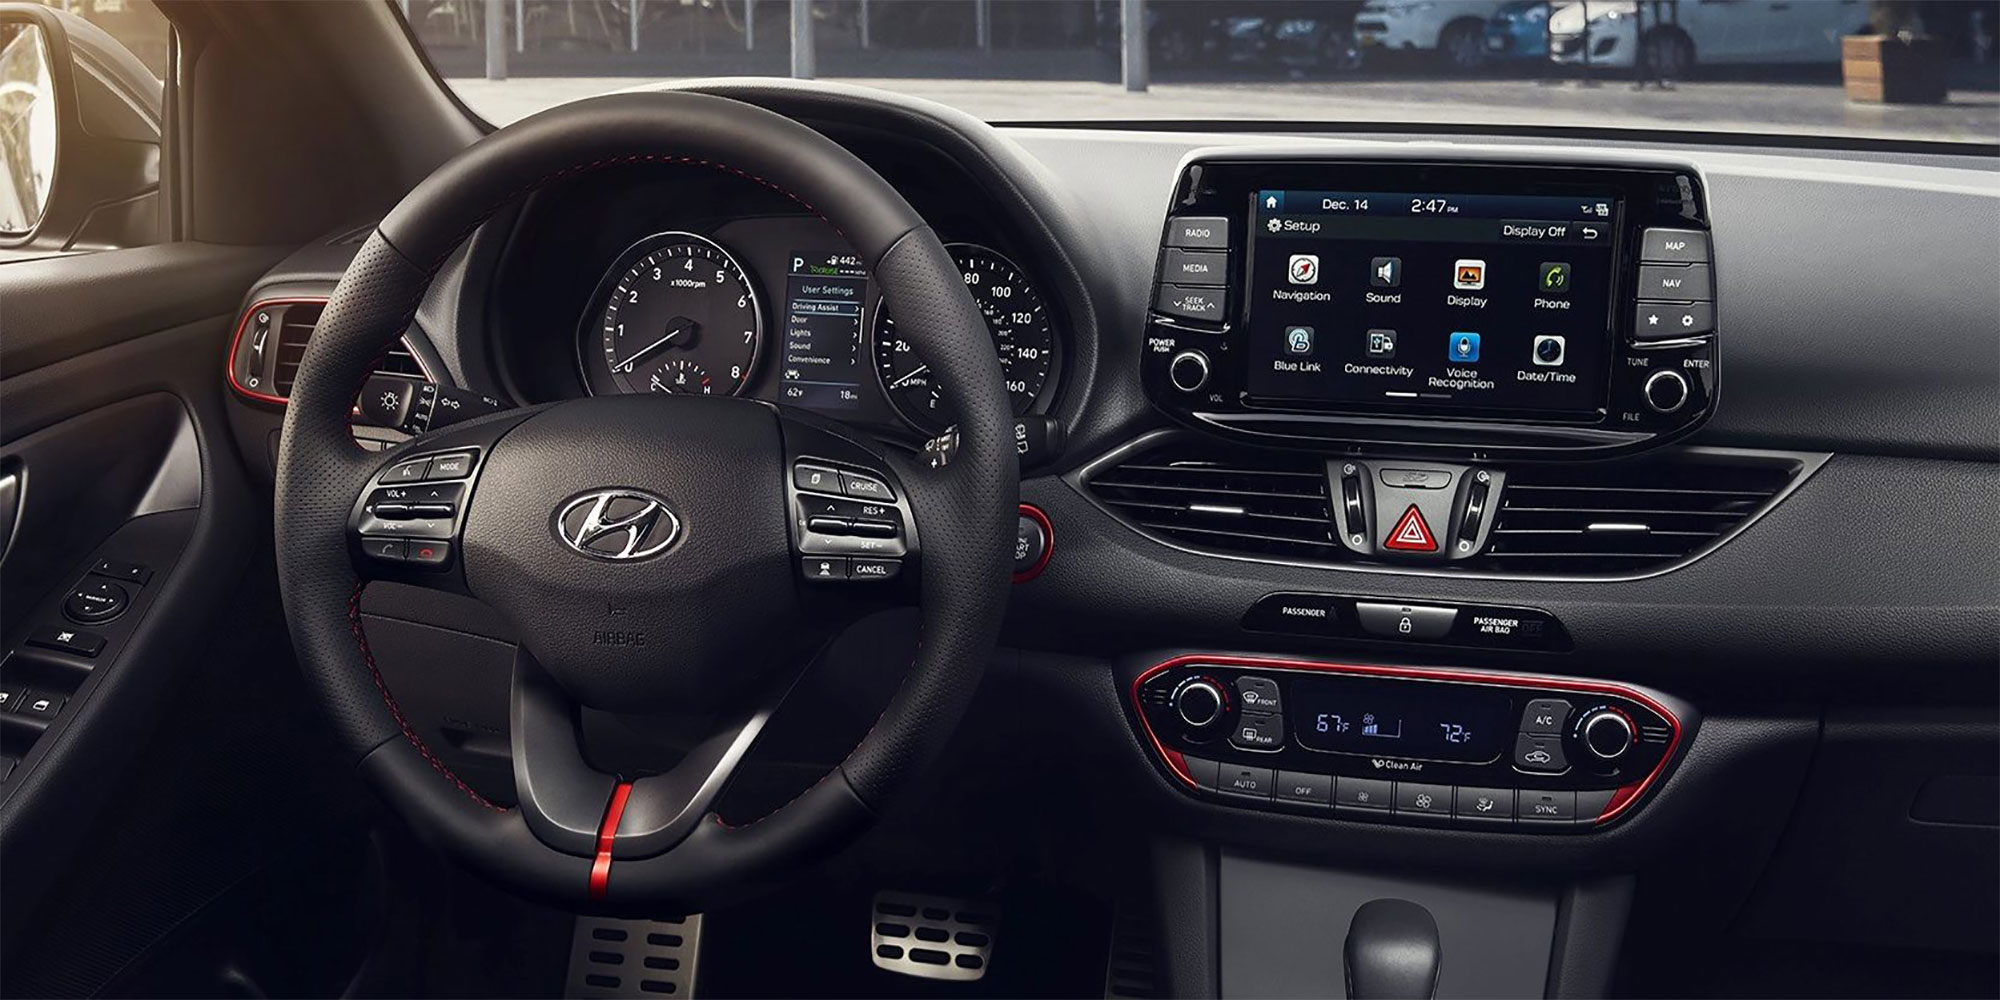 Hyundai in-car navigation system